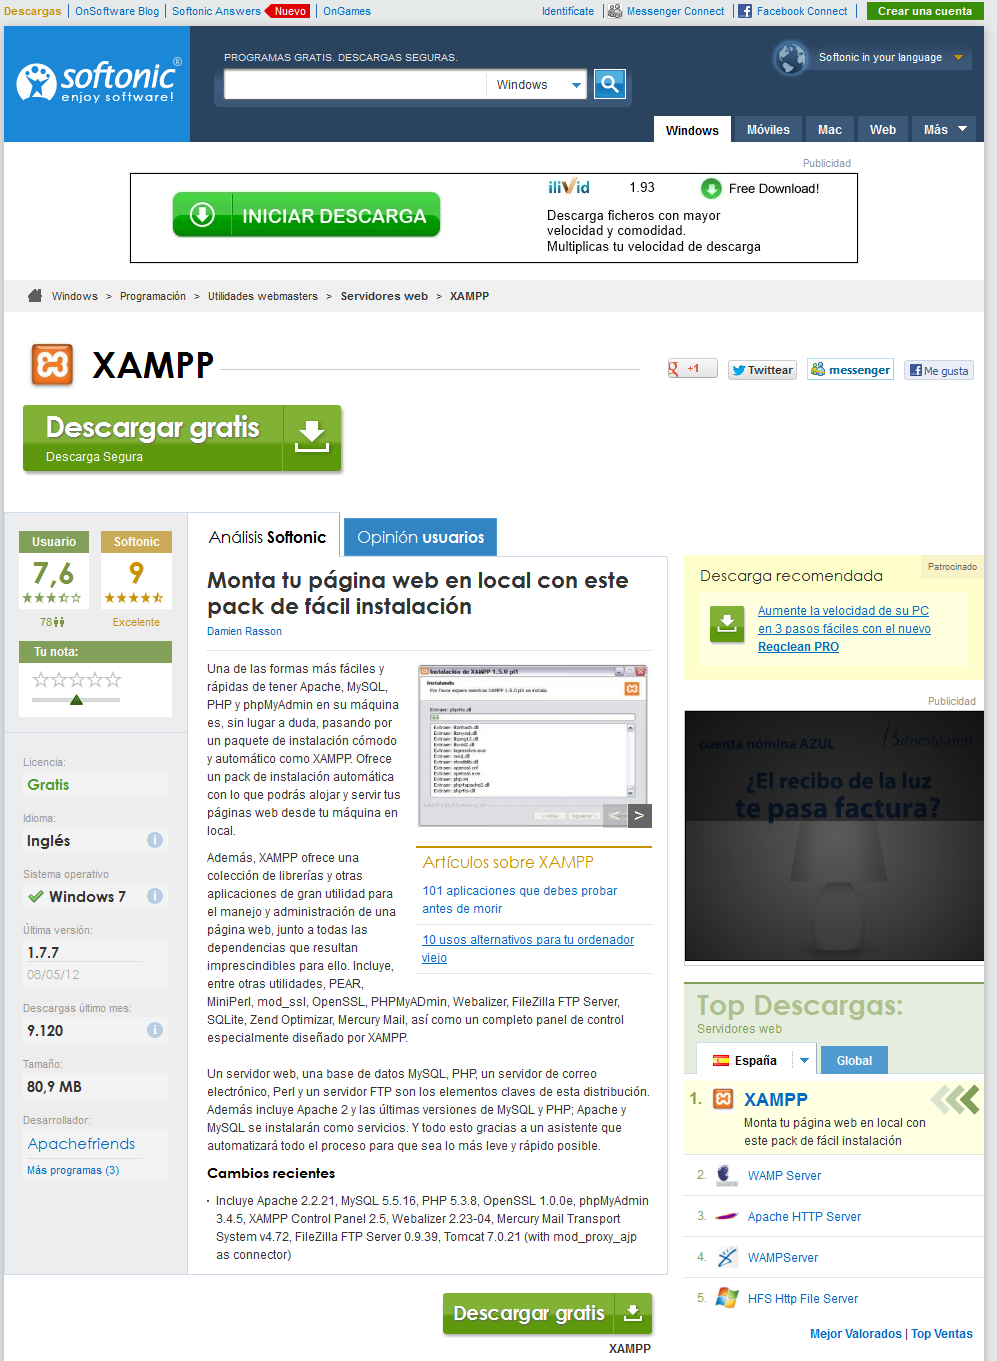 xampp control panel v3.2.1 download free 32bit